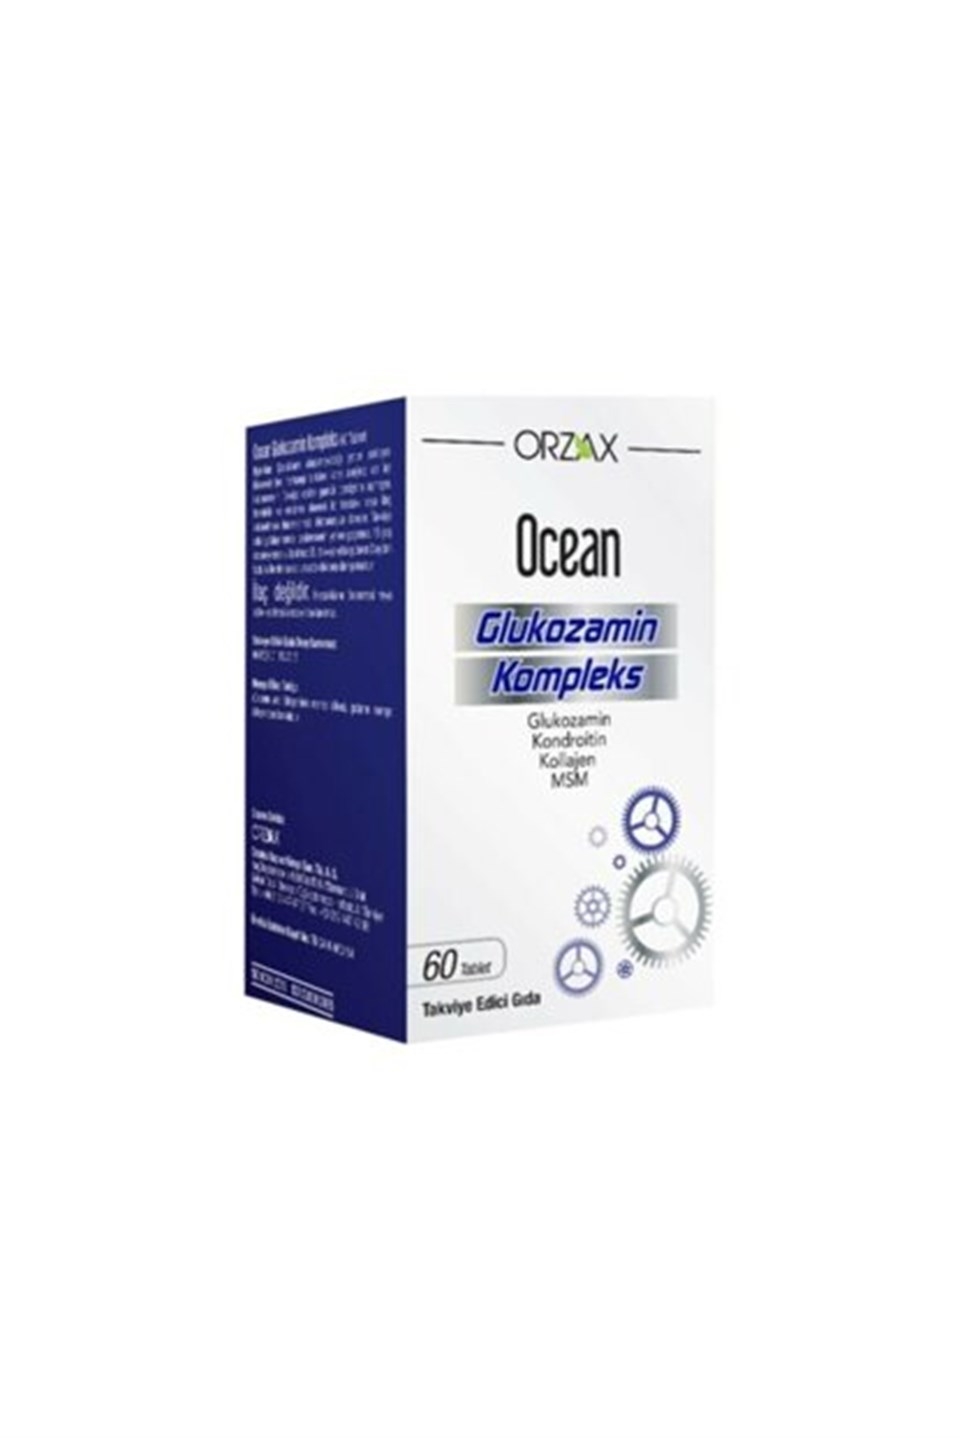 Ocean Glucosamine Complex 60 таблеток ORZAX